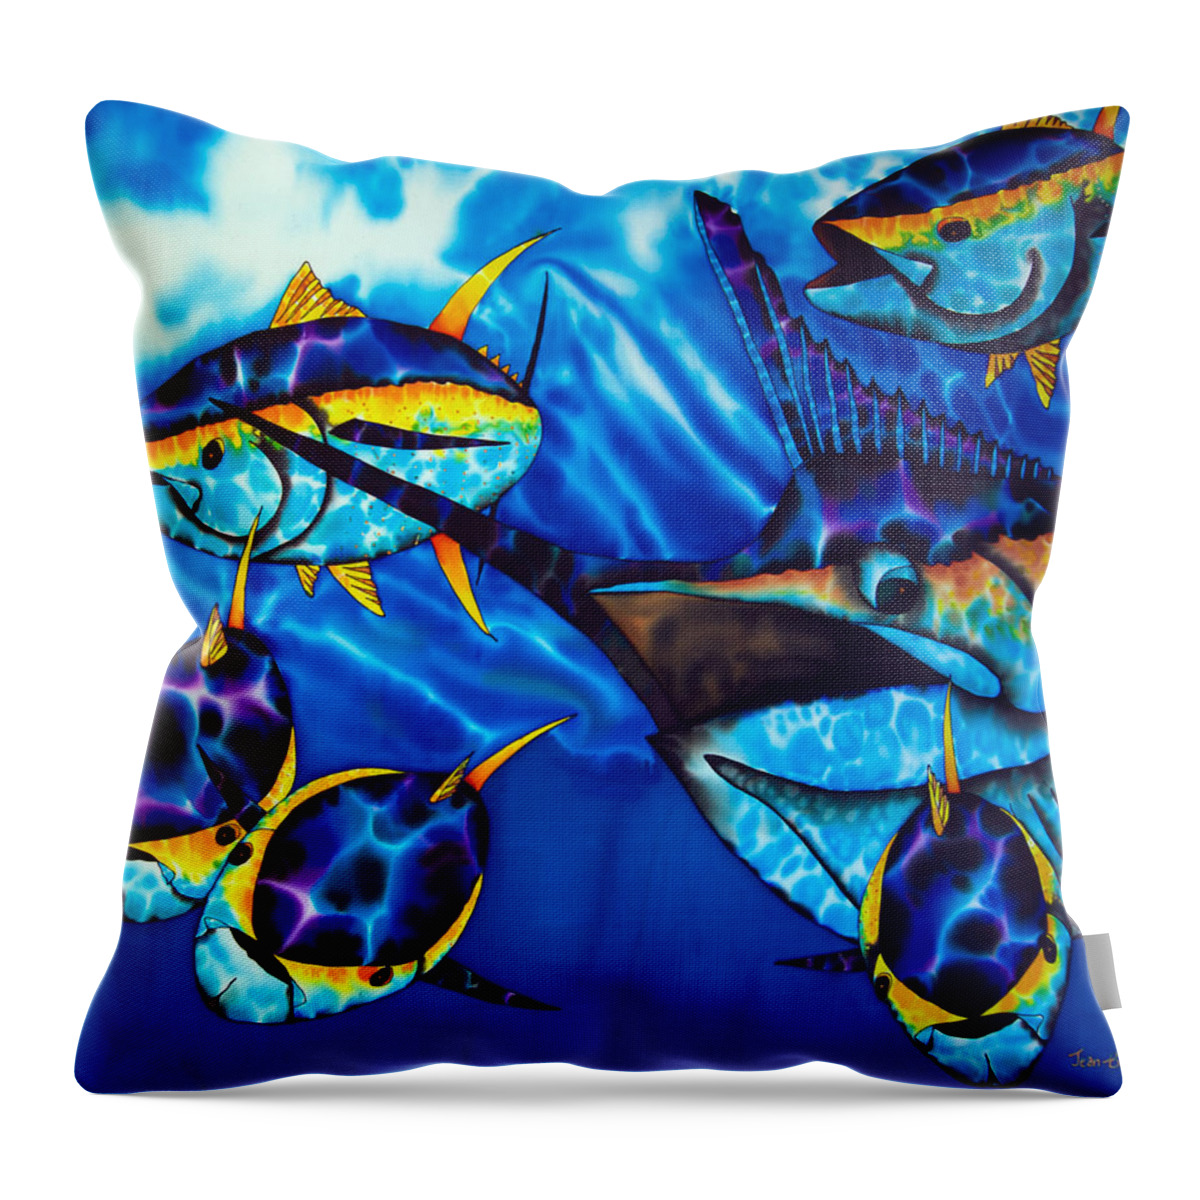  Yellowfin Tuna Throw Pillow featuring the photograph Blue Marlin and Yellowfin Tuna by Daniel Jean-Baptiste